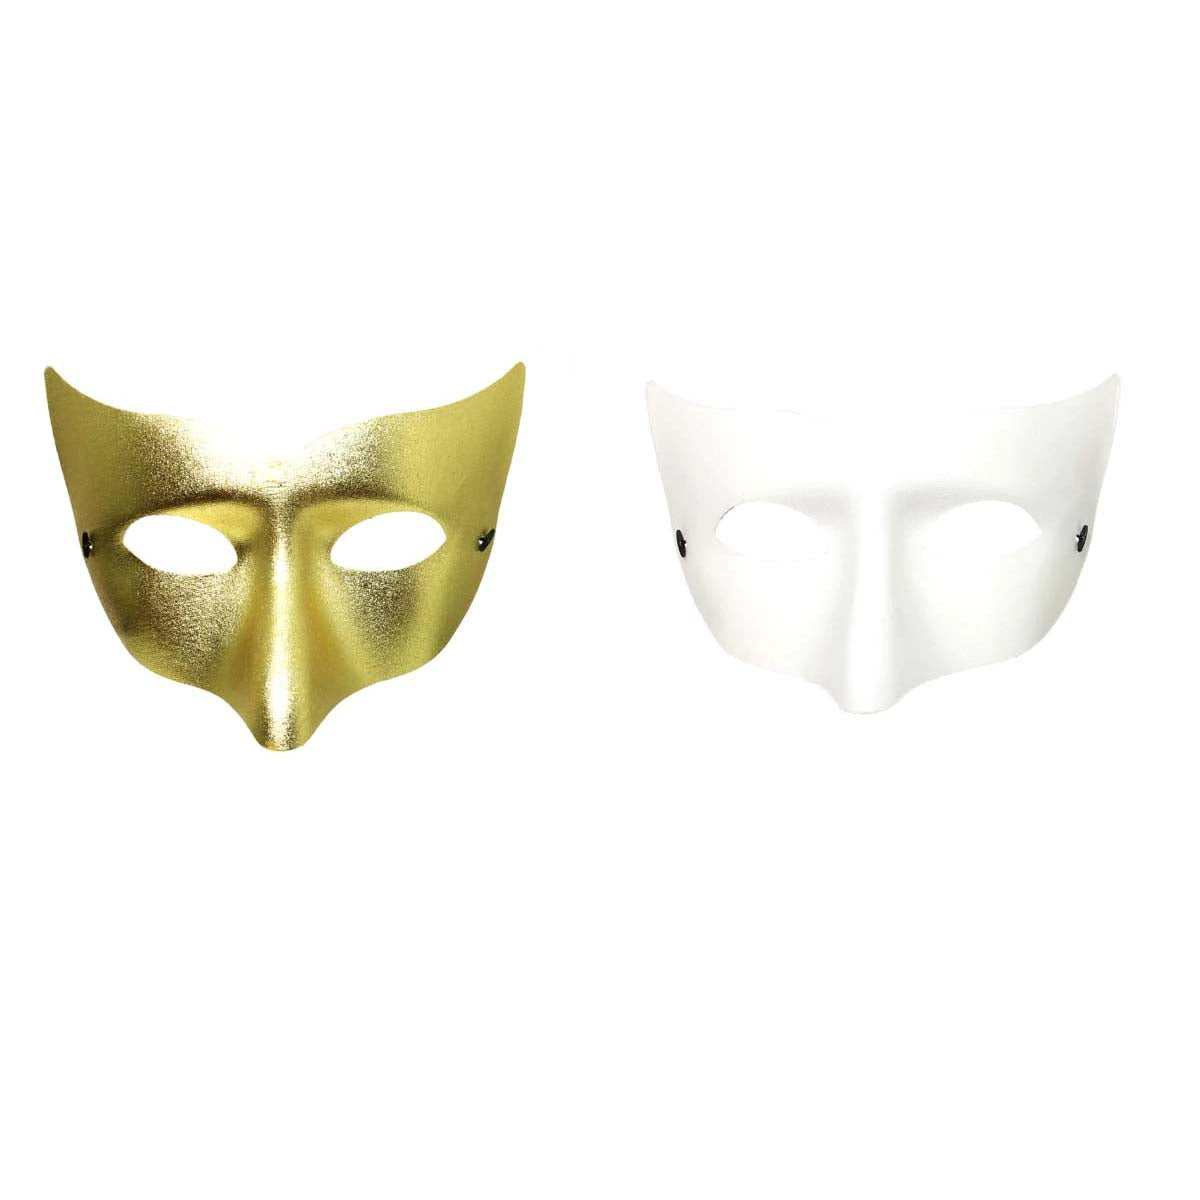 V-Shaped Masks